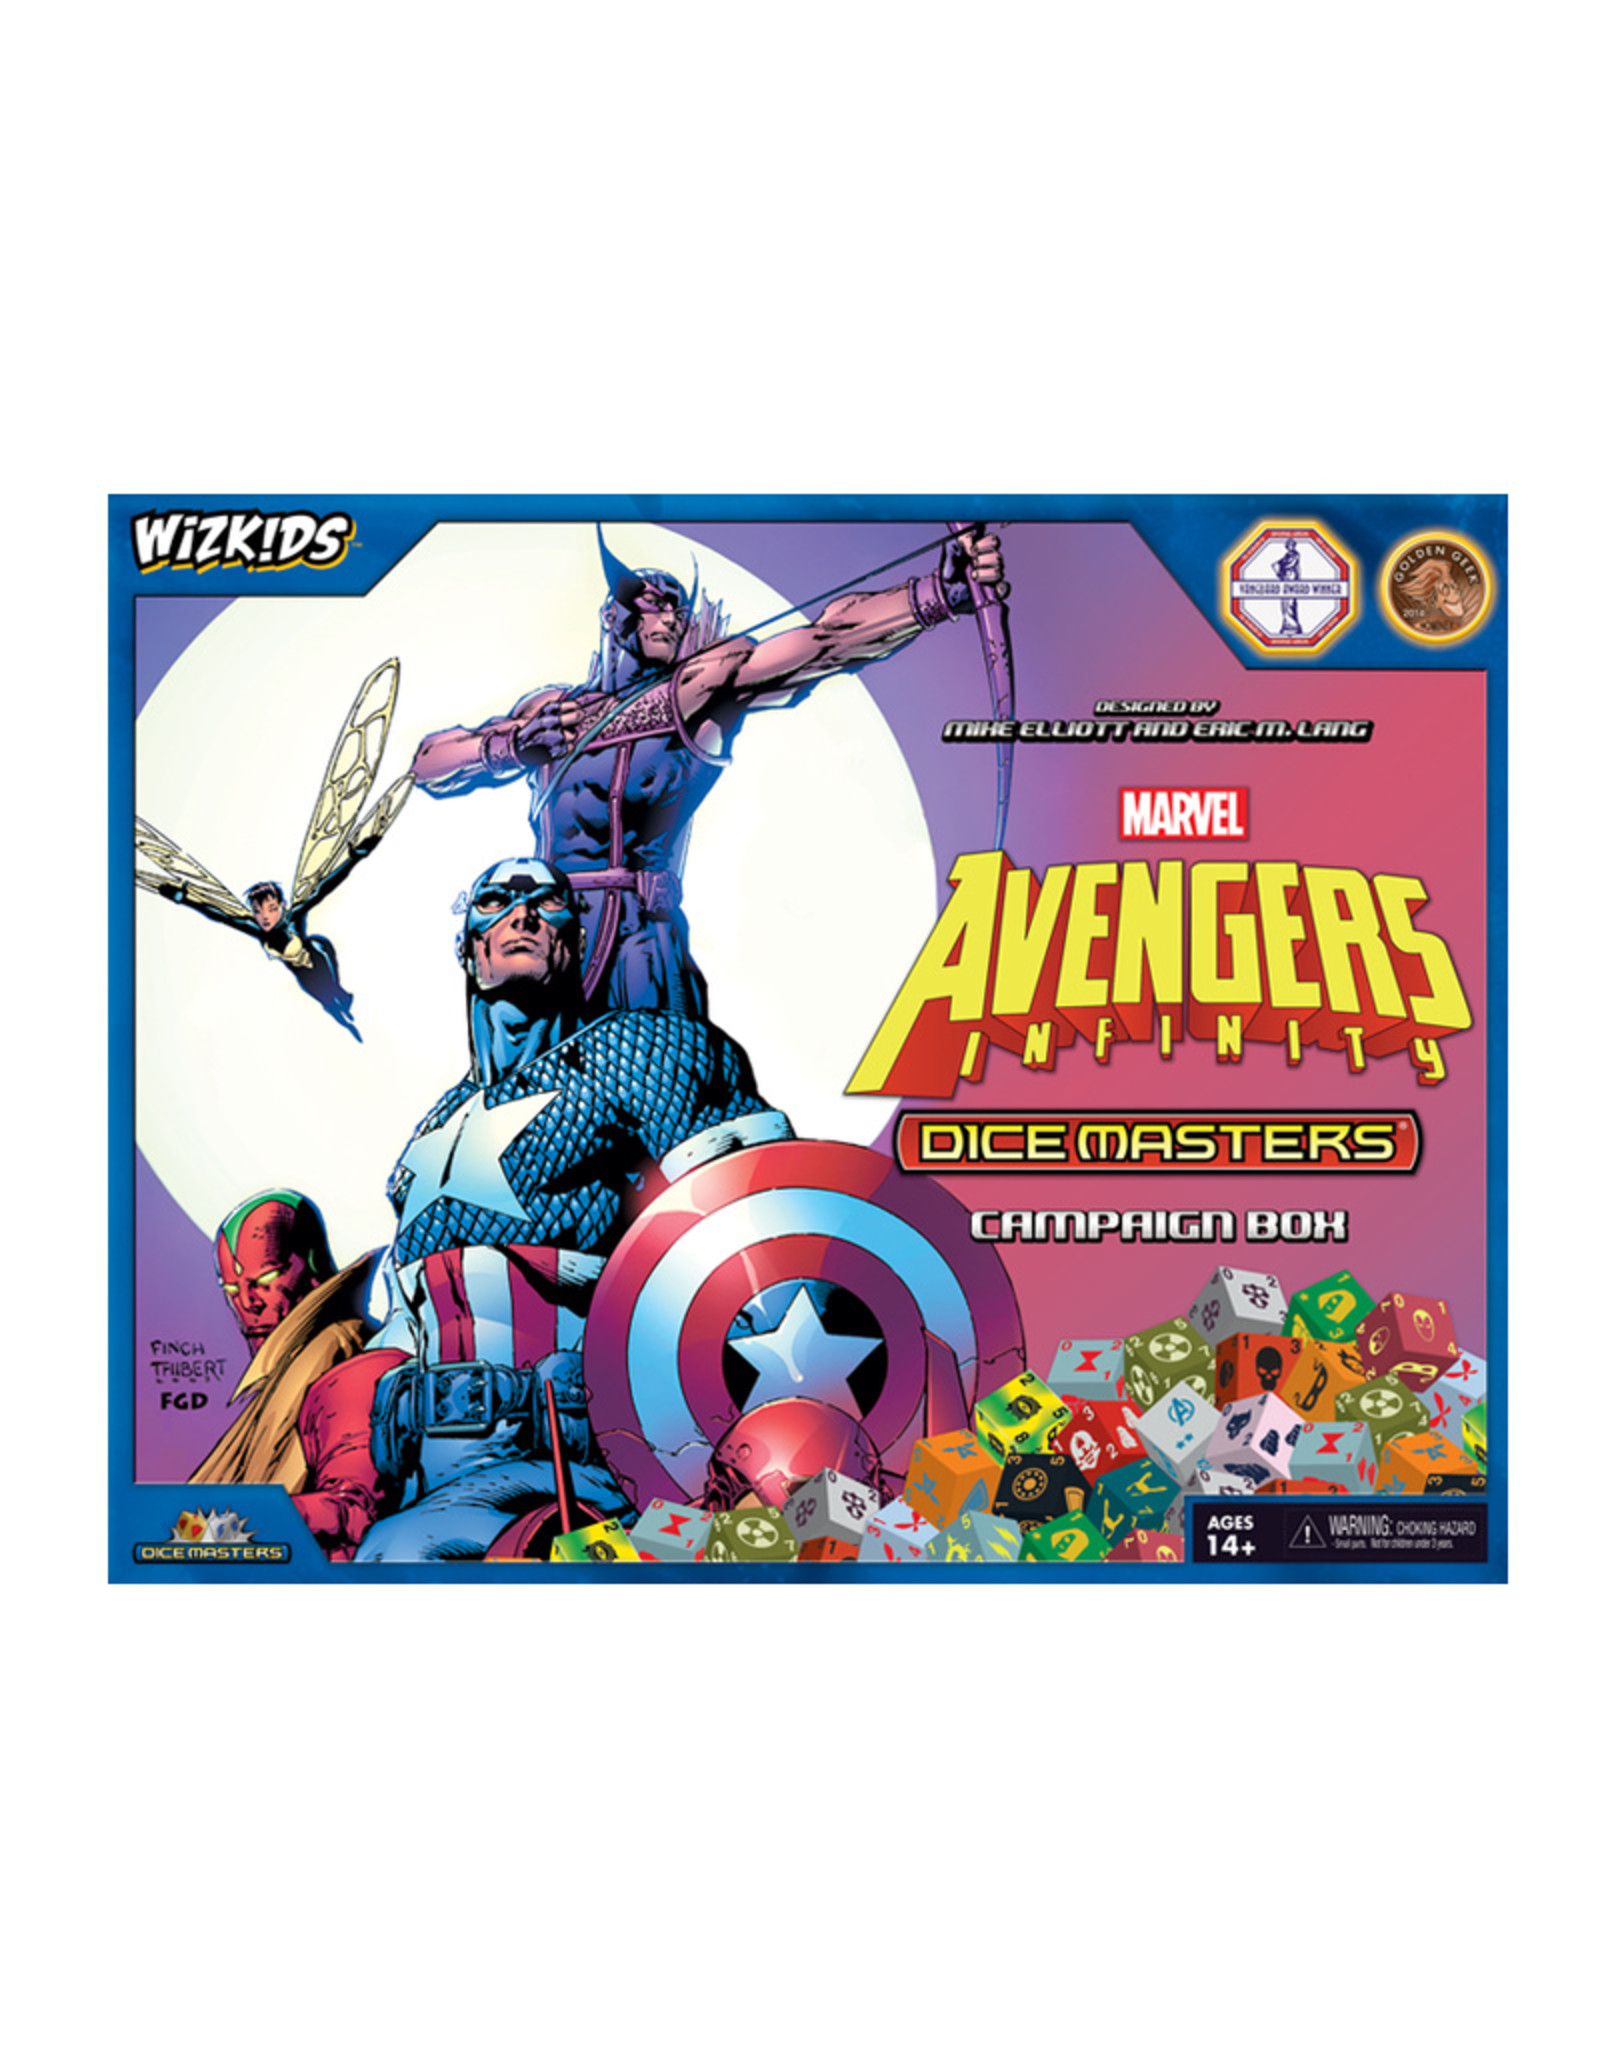 WizKids/NECA Dice Masters: Avengers Infinity Campaign Box